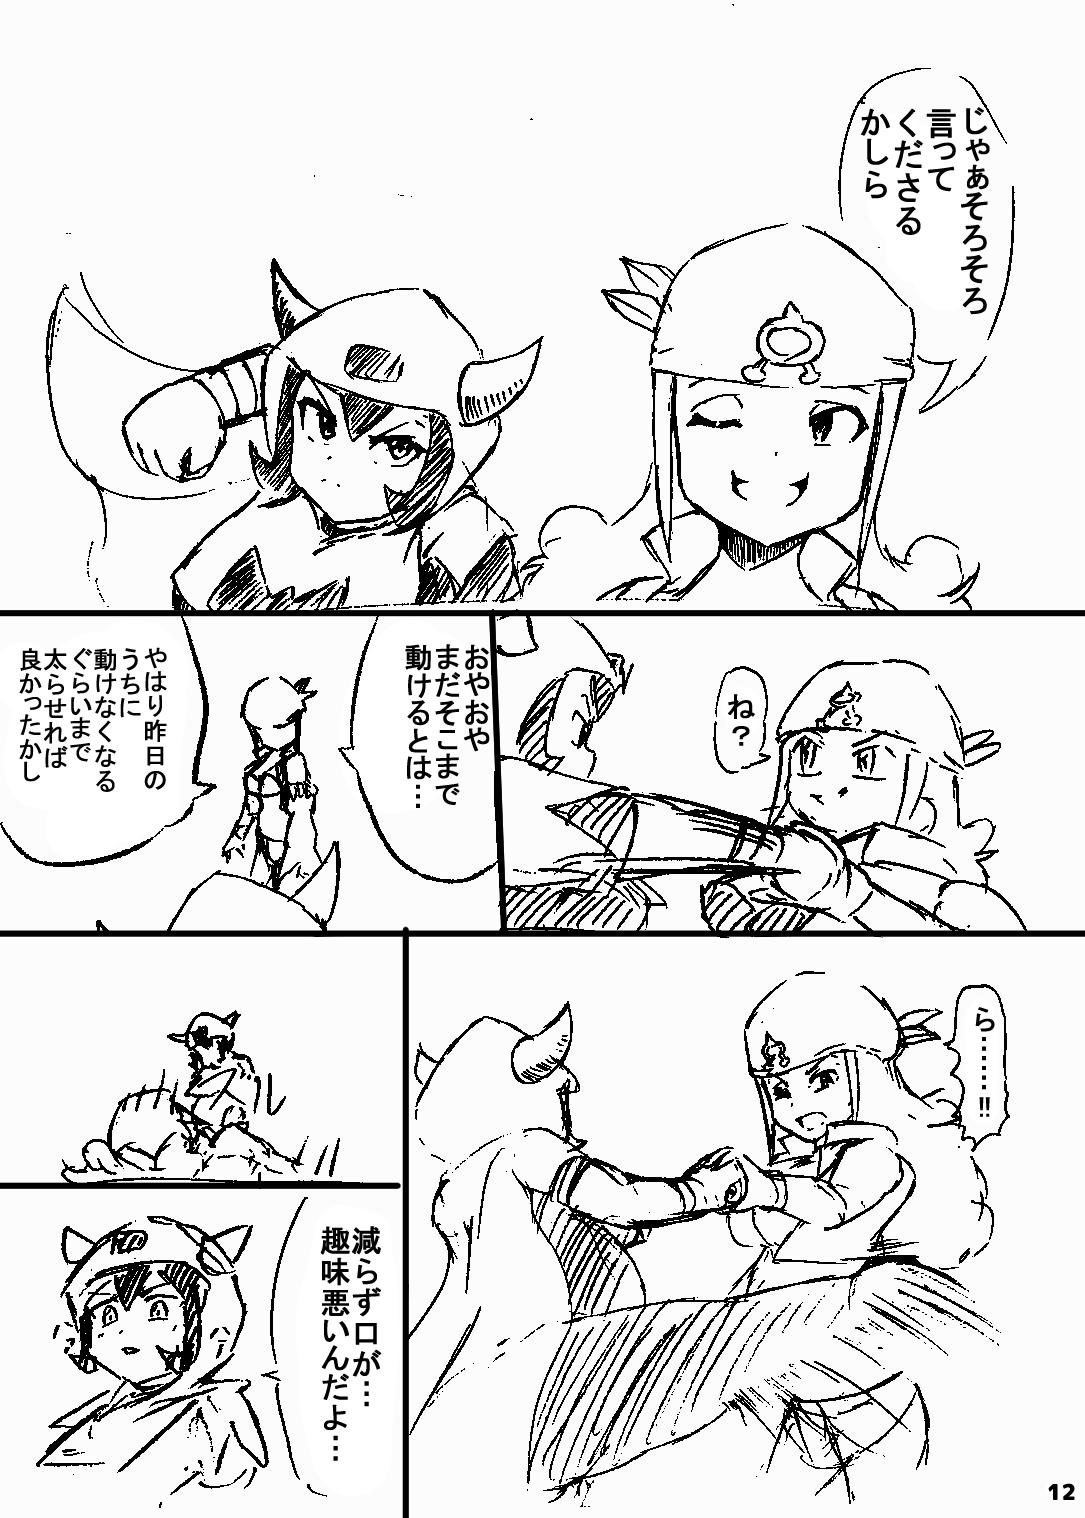 Skinny ポケスペカガリ肥満化漫画 - Pokemon Spooning - Page 11